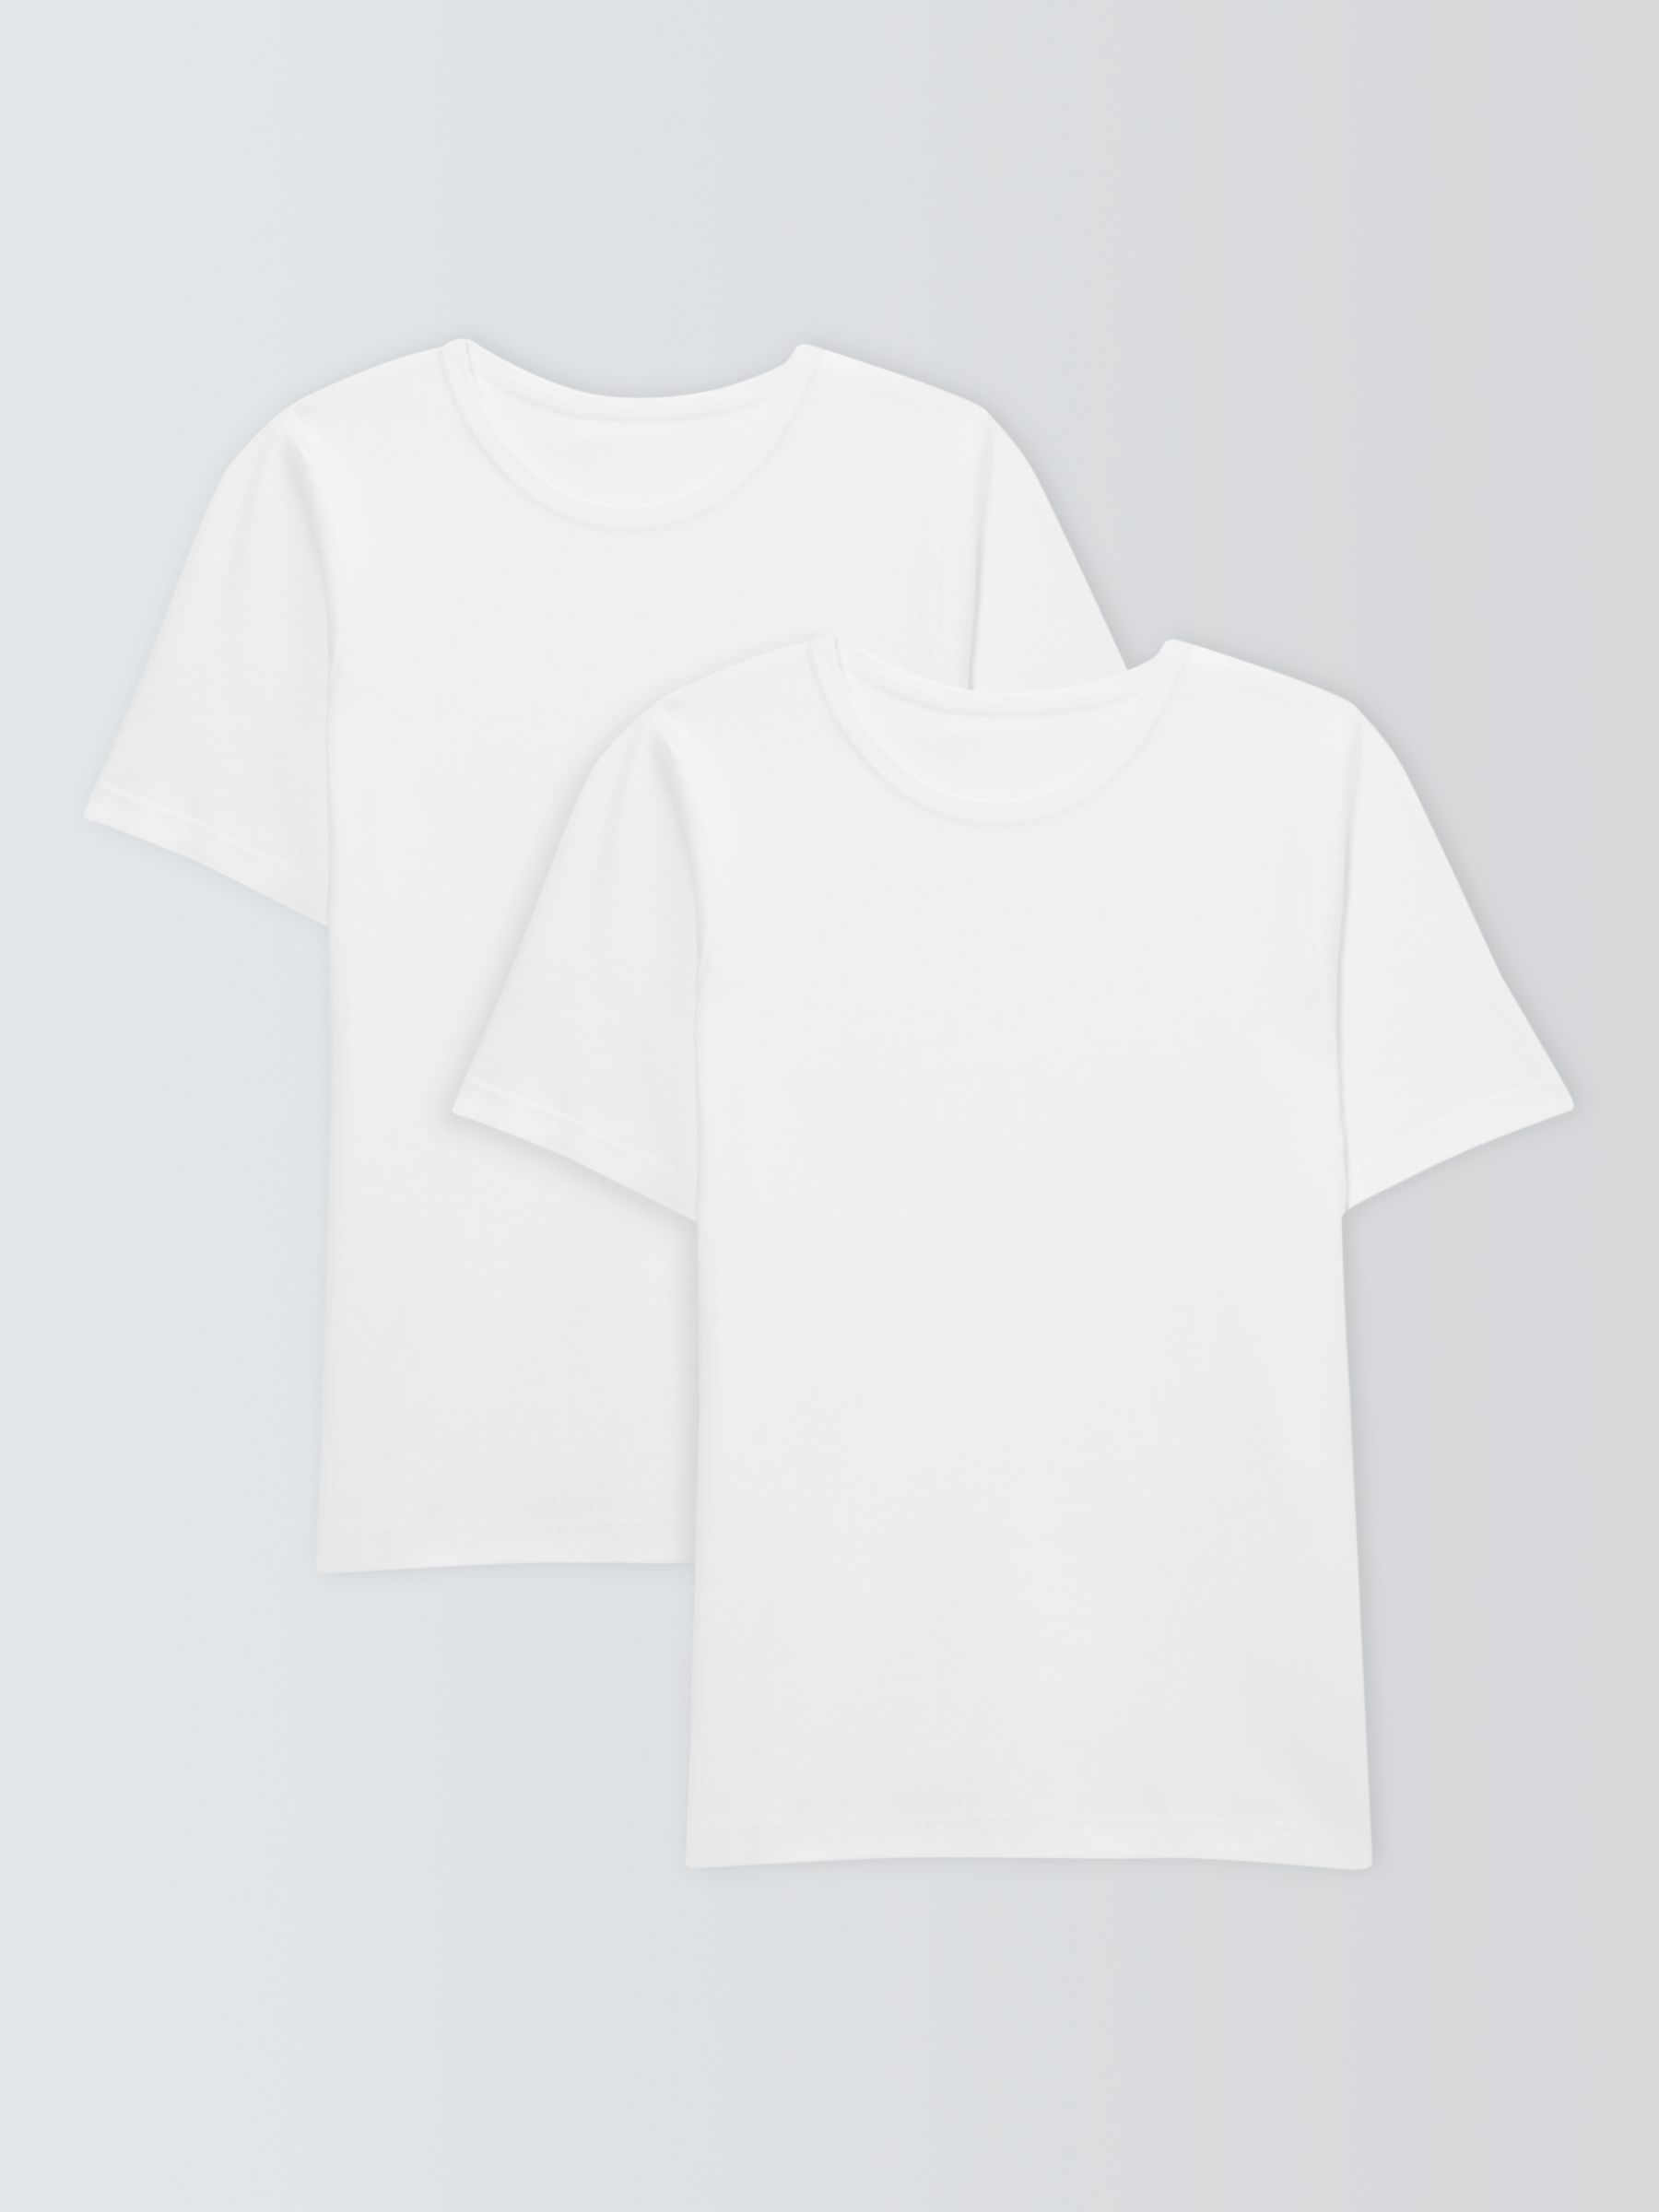 John Lewis Kids' Thermal Short Sleeve Top, Pack of 2, White, 2-3 years